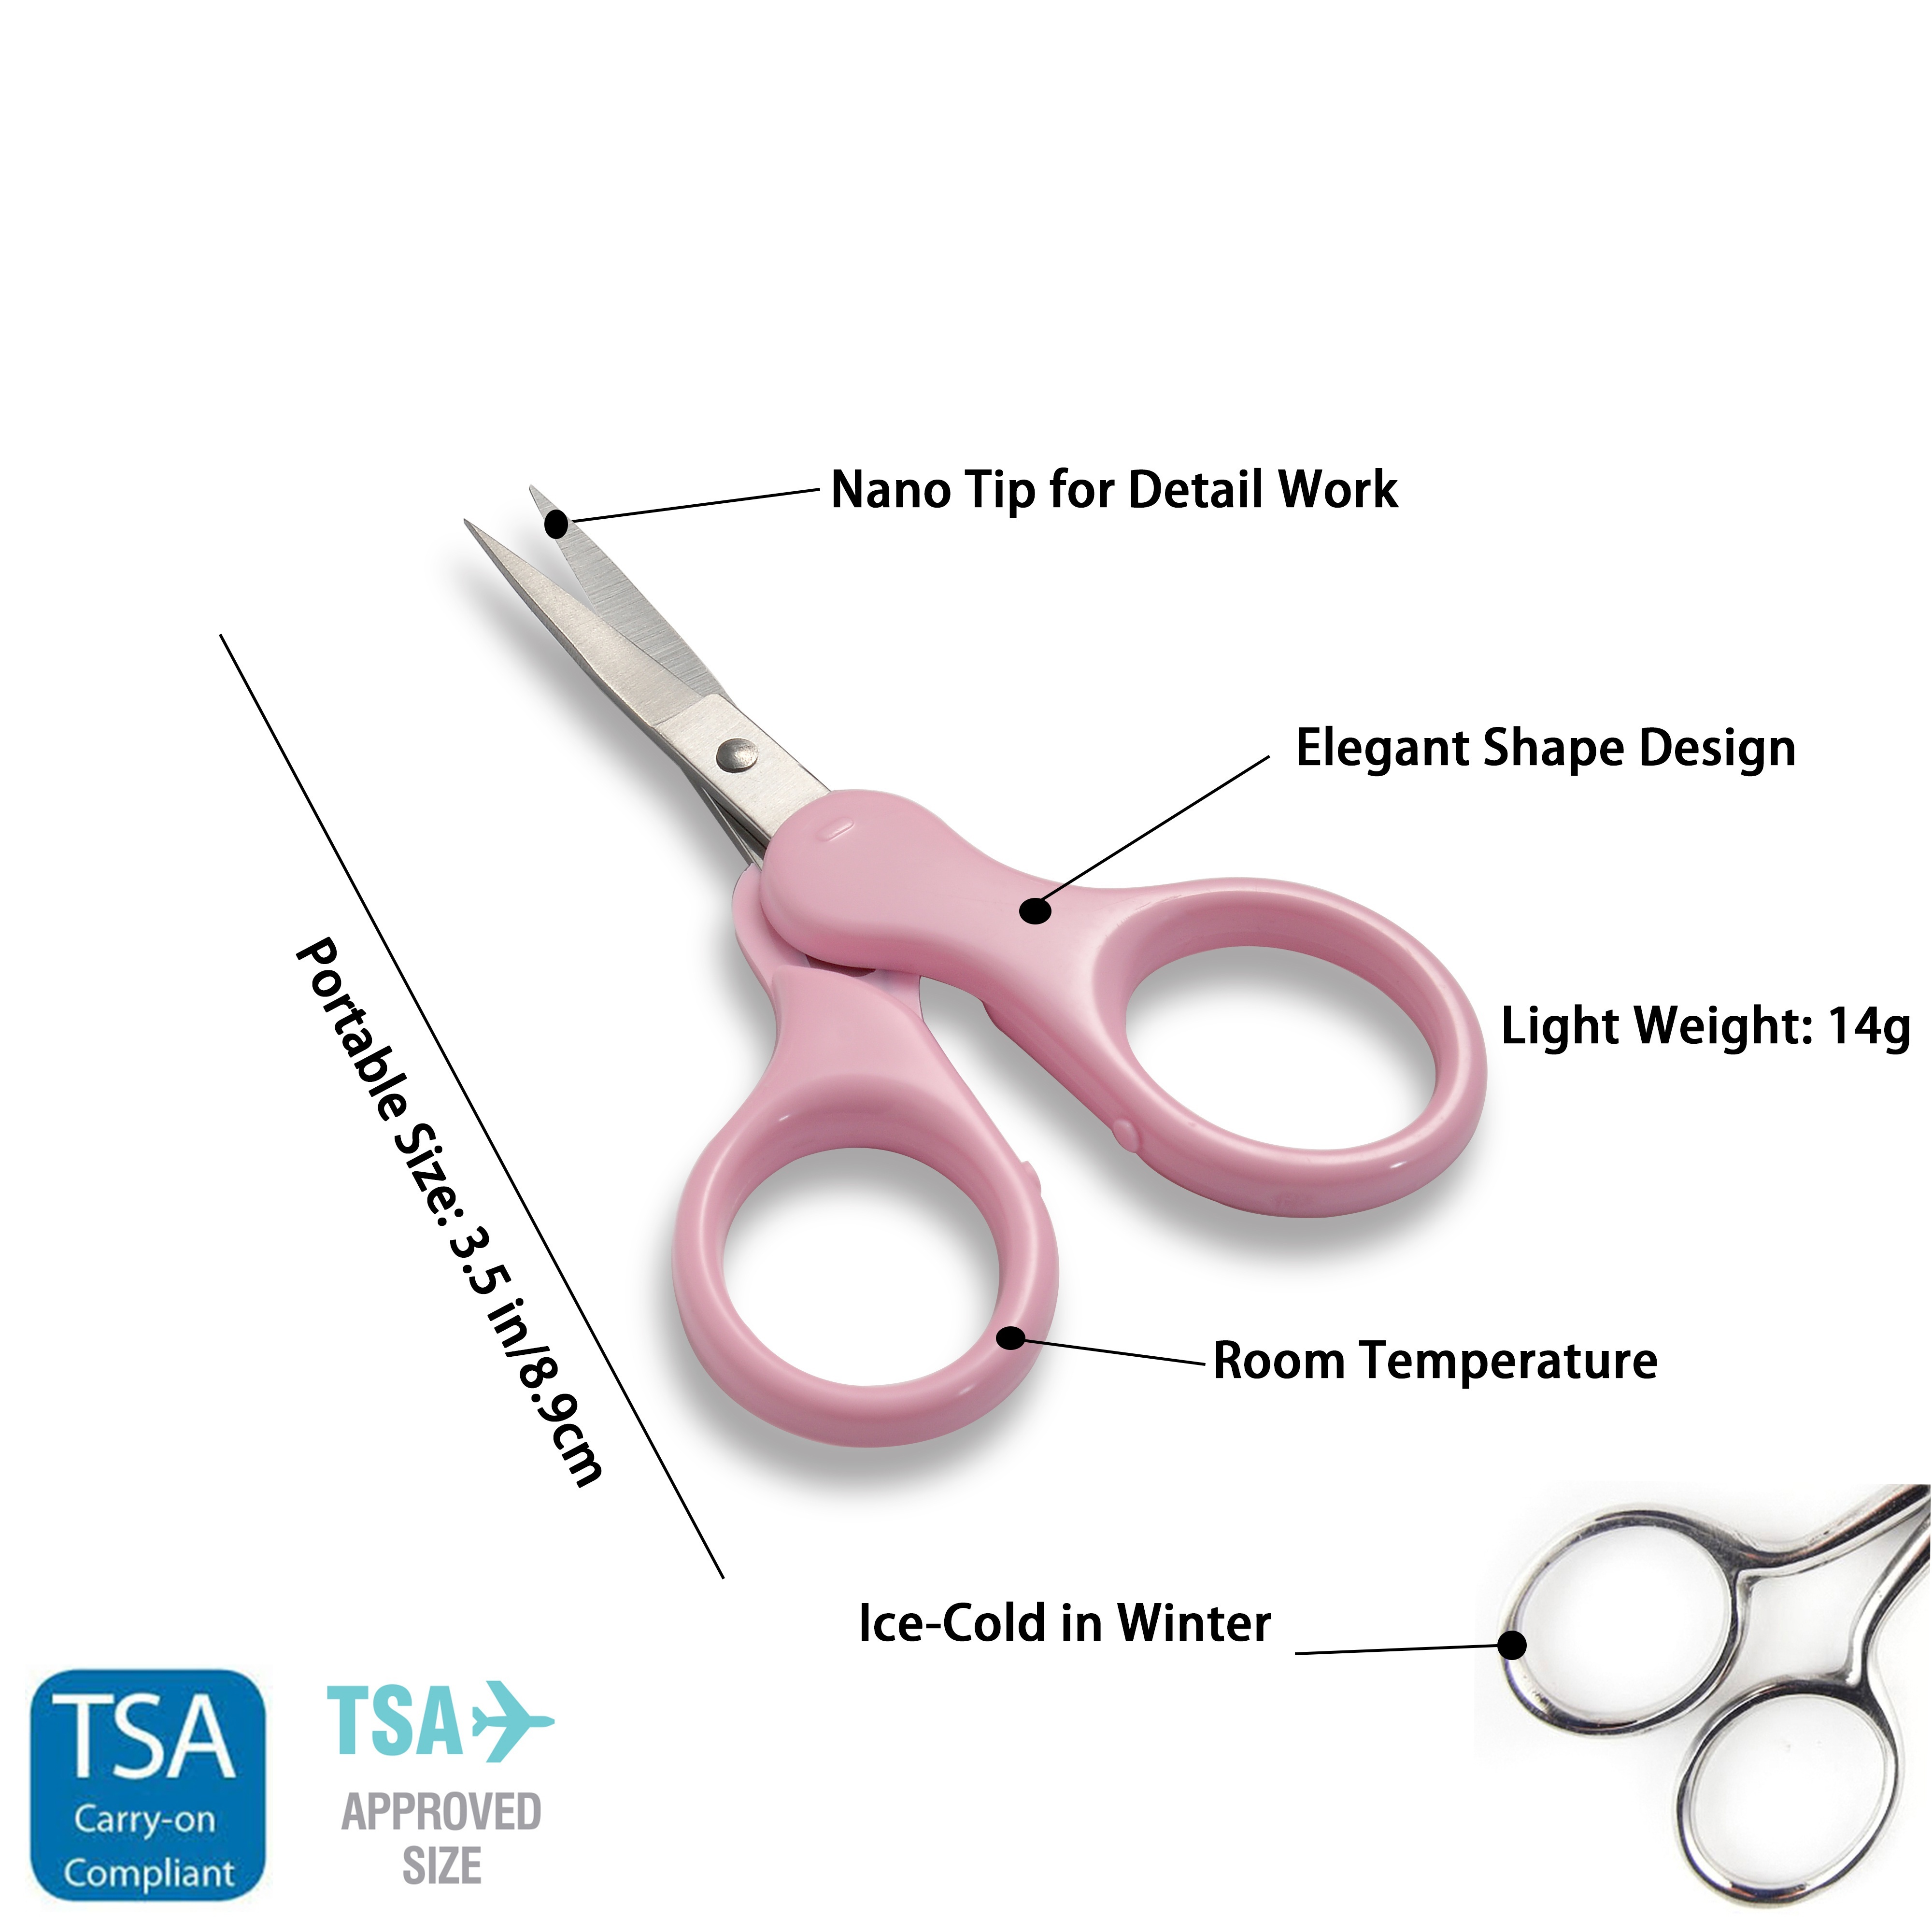 Sharp 5 inch Embroidery Scissors - TSA Compliant